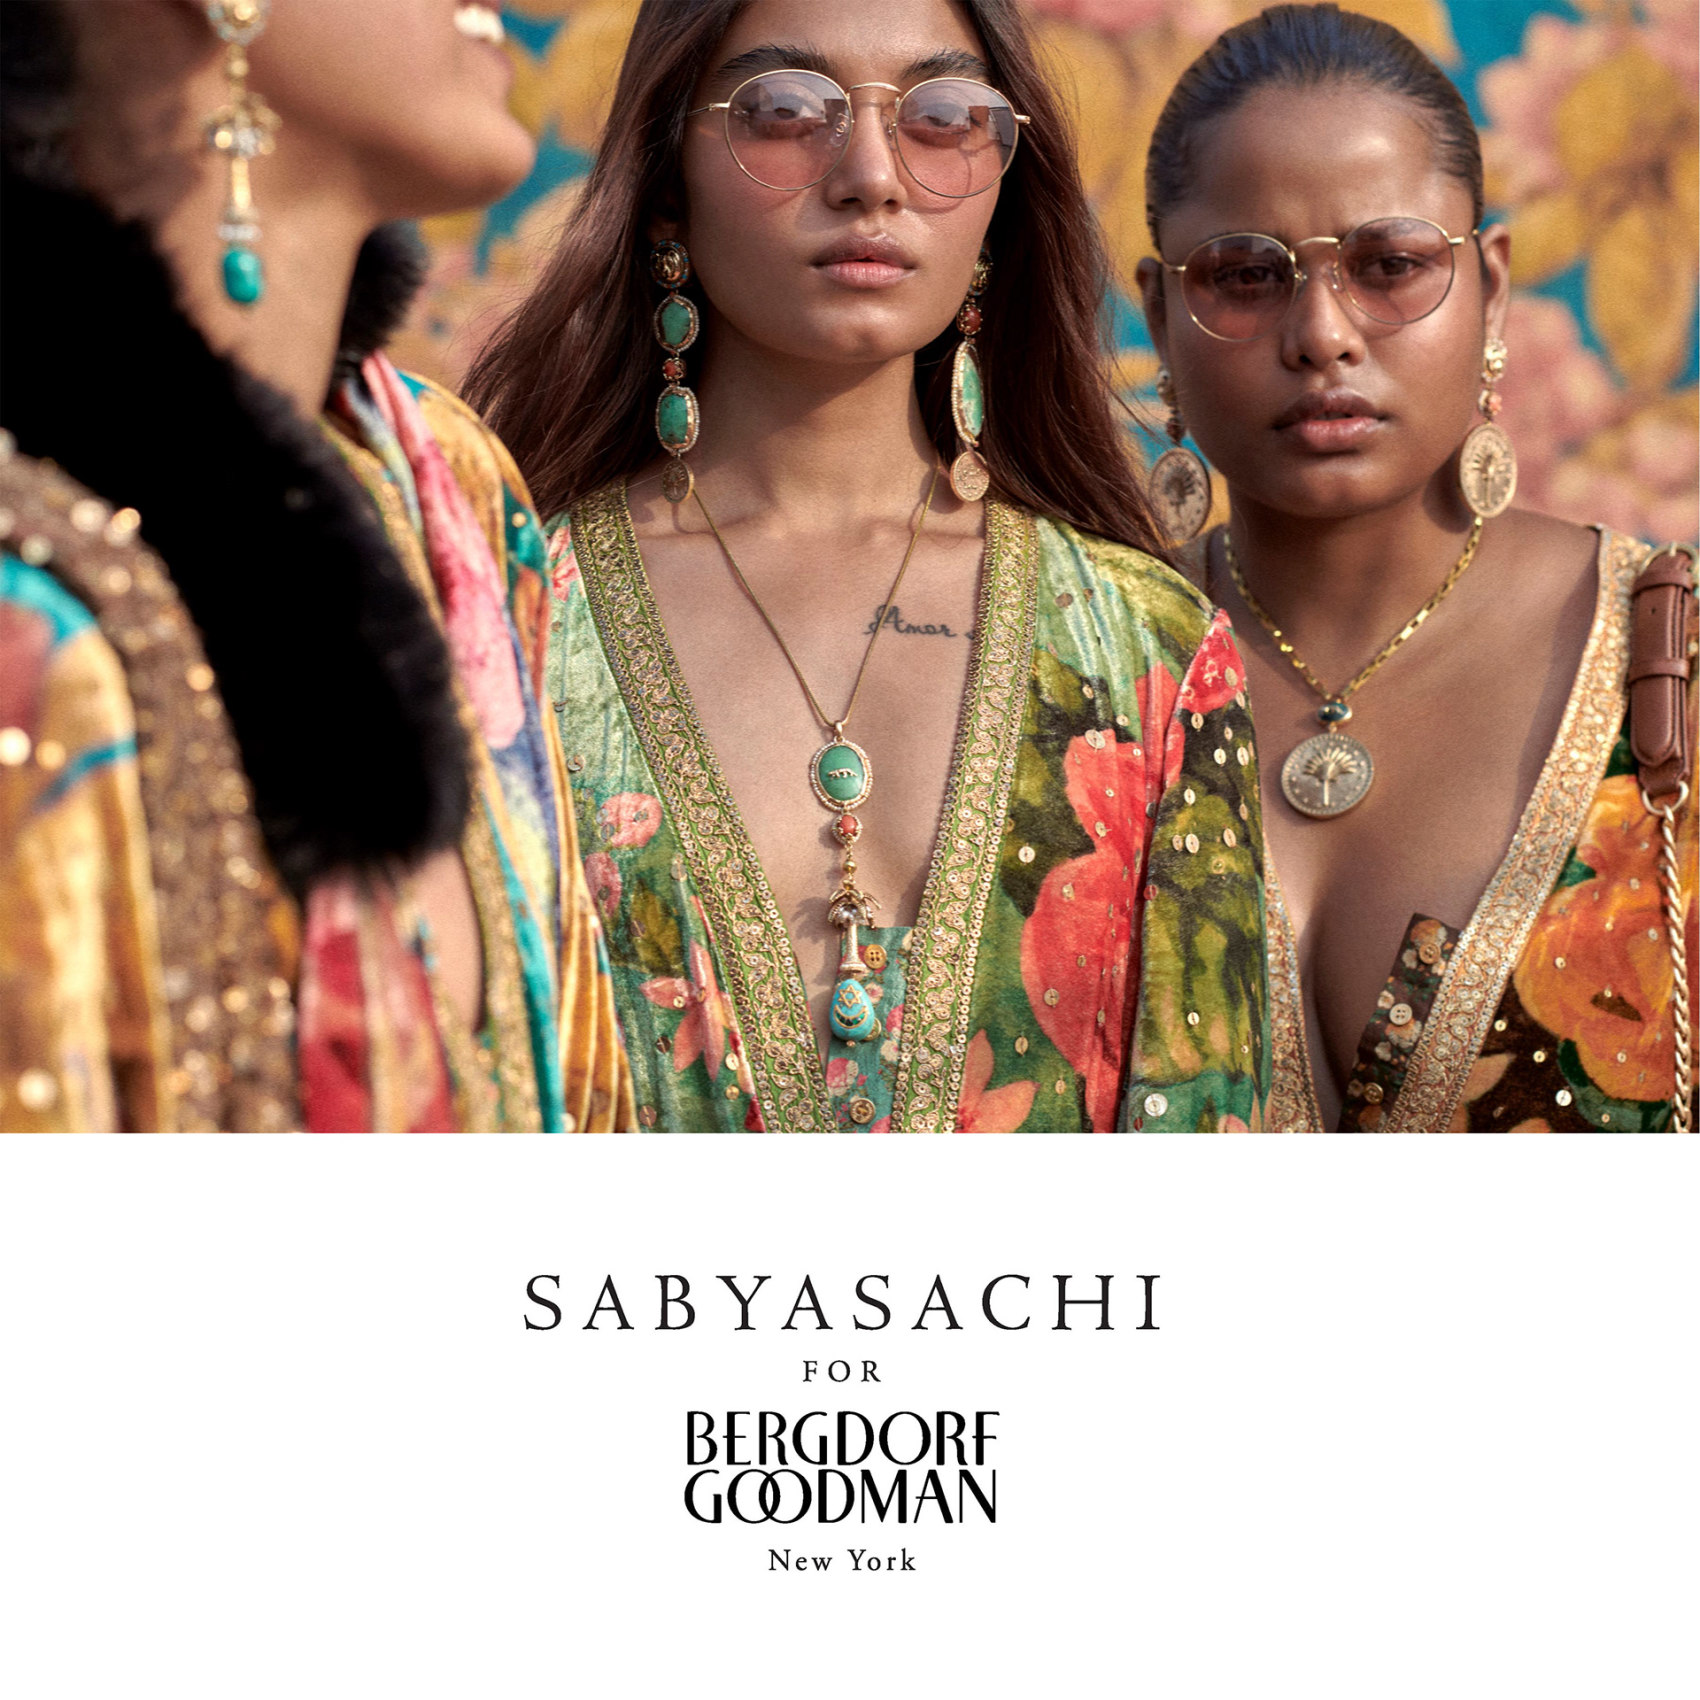 Sabyasachi returns to Bergdorf Goodman in New York